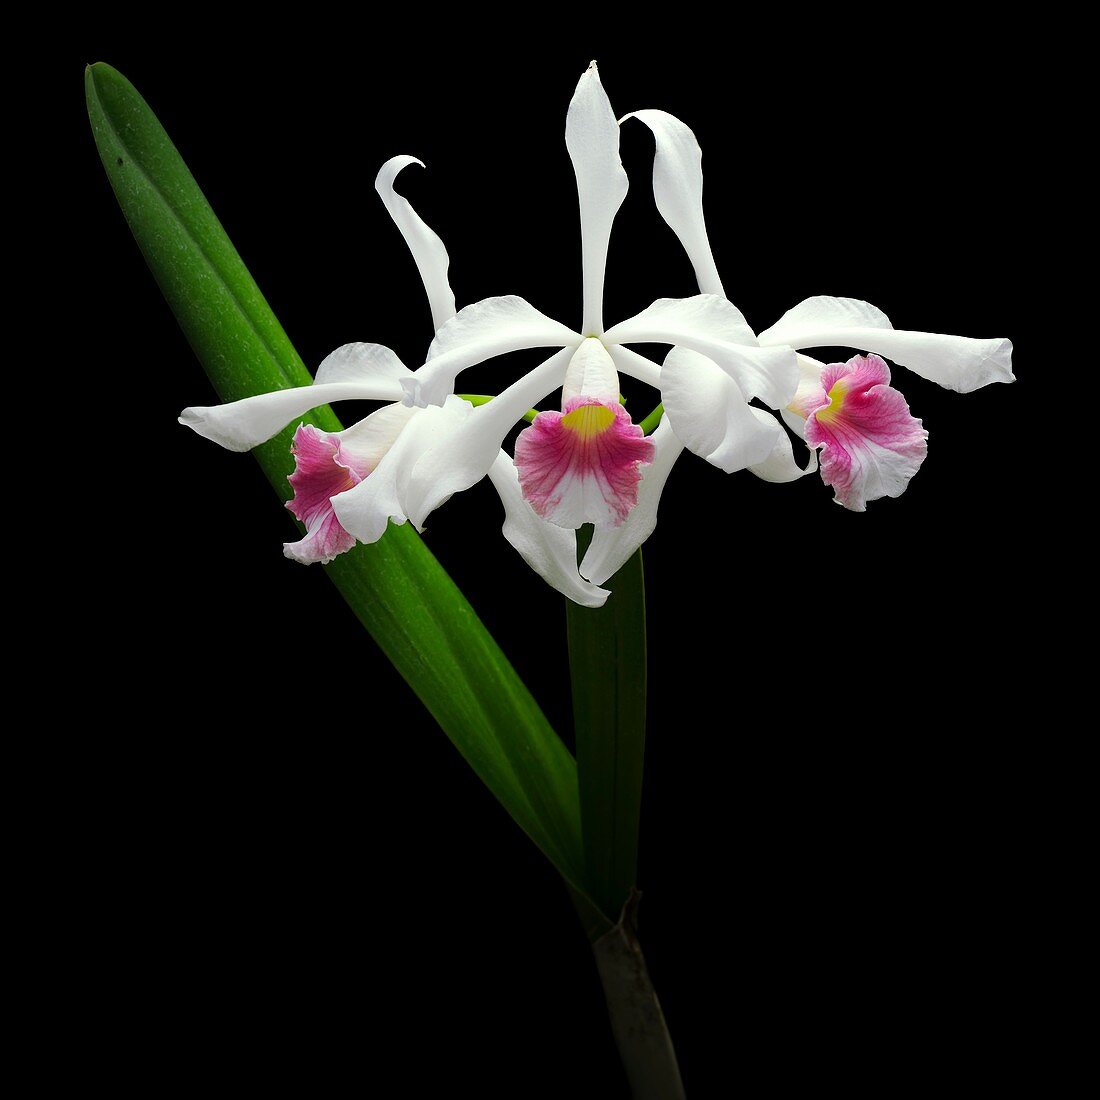 Cattleya purpurata 'Roberts' orchids